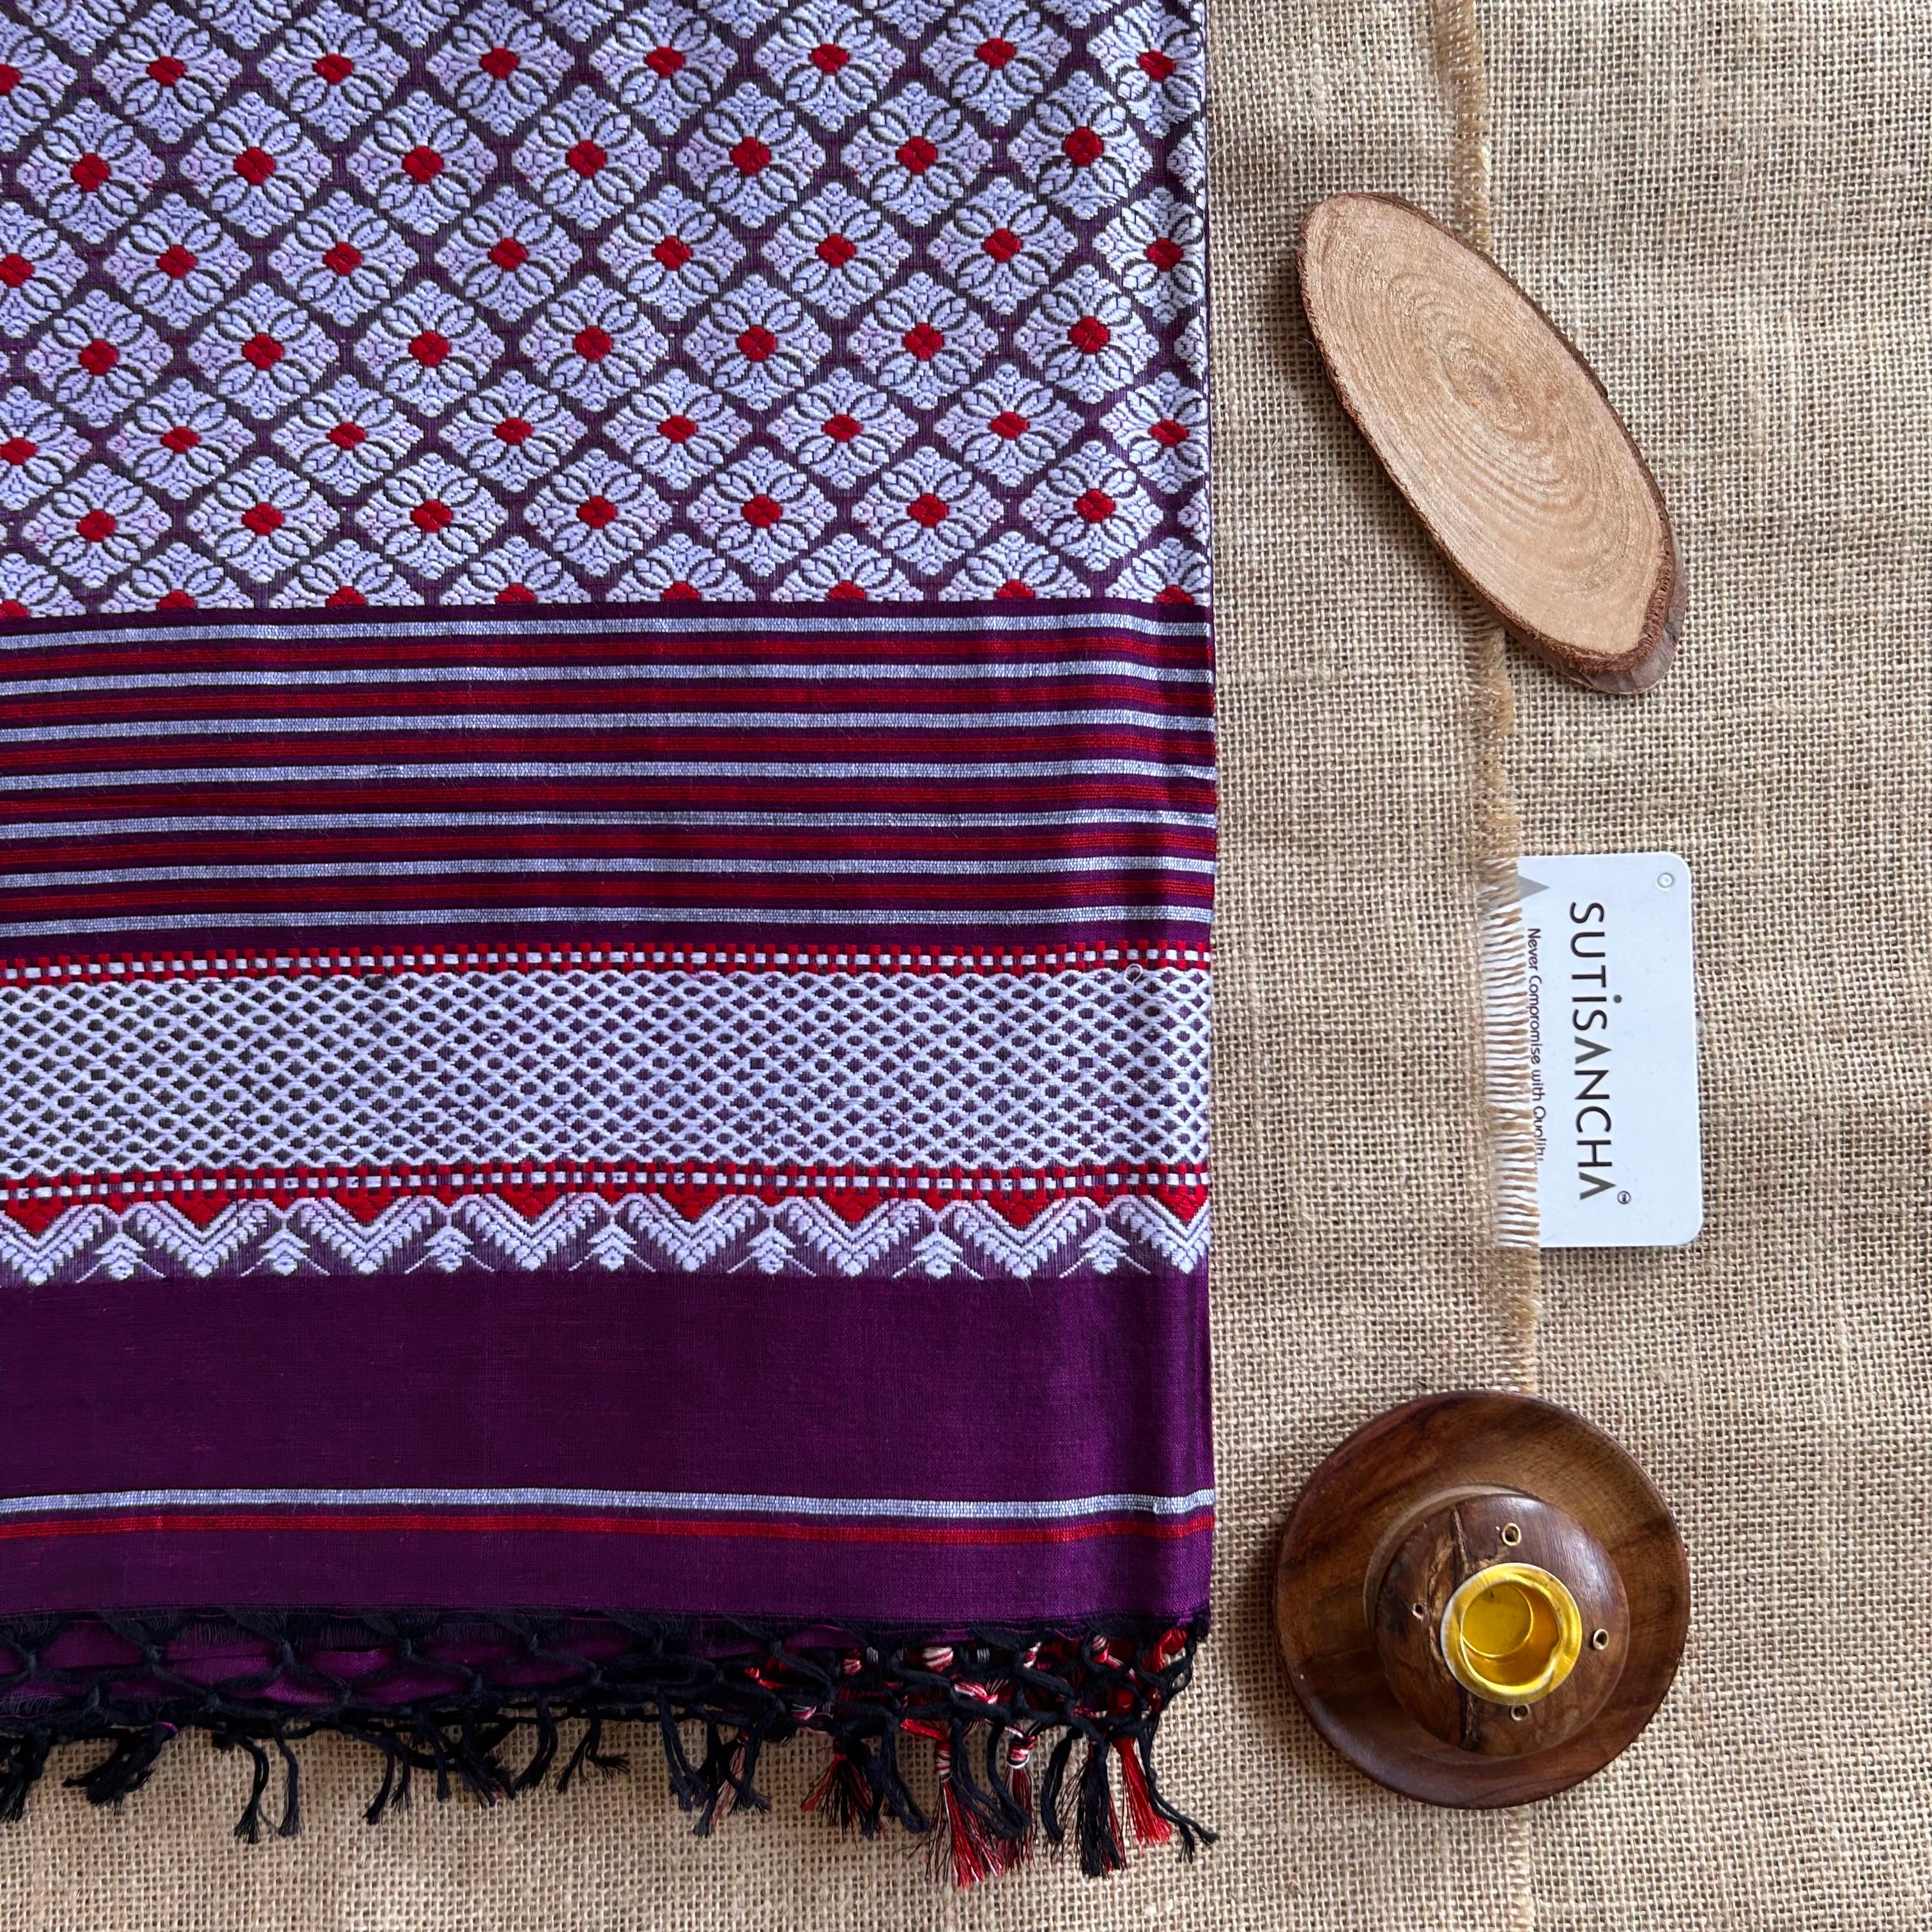 Pure Handloom Cotton Purple plum jamdani Weaving saree